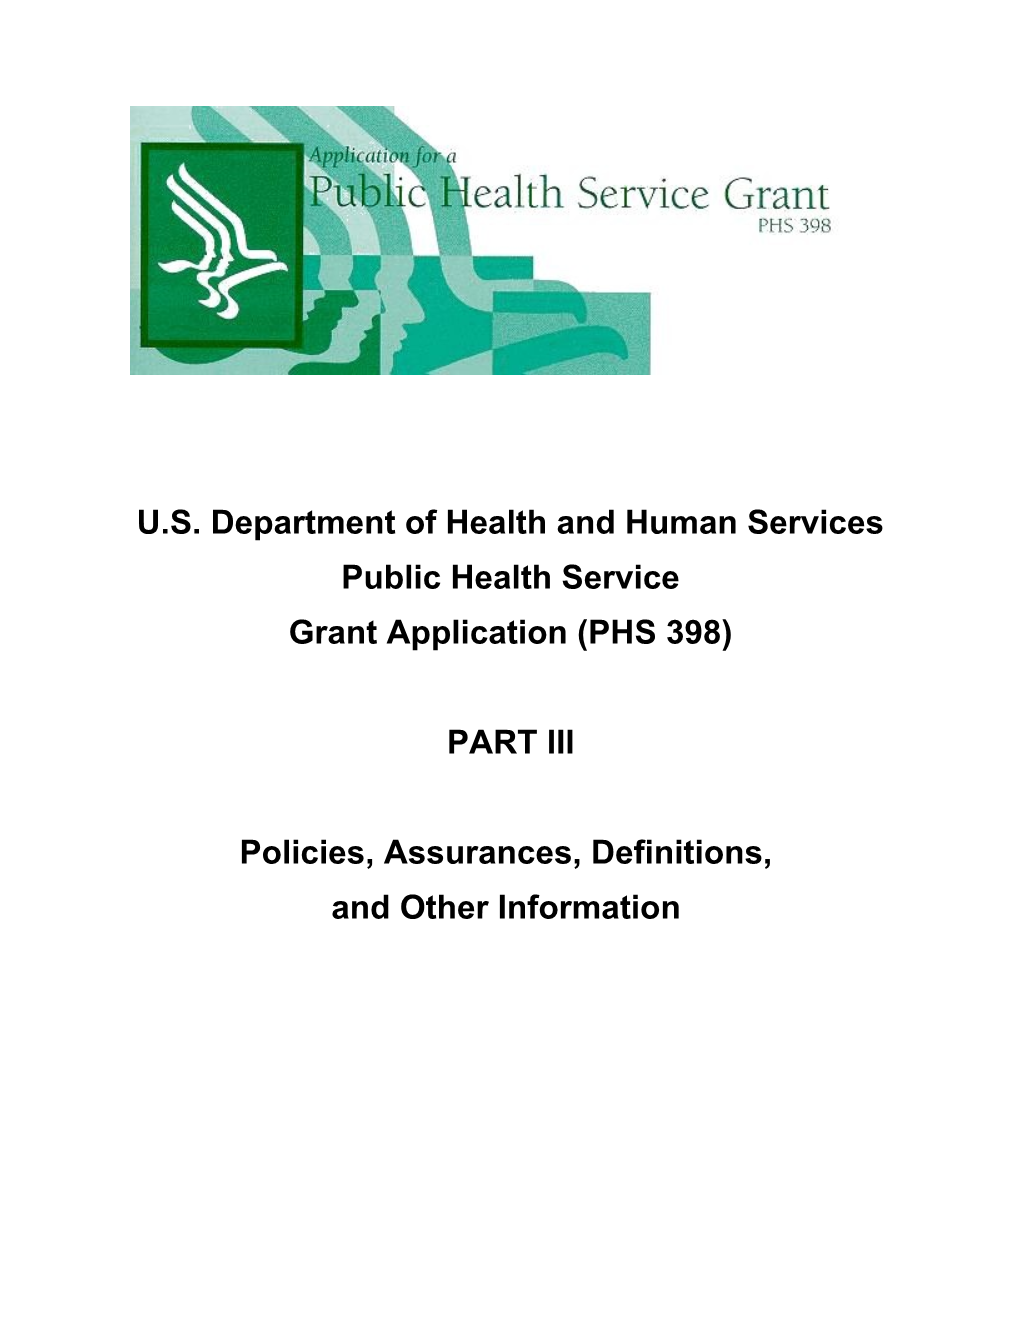 U.S. DHHS Public Health Service Grant Application (PHS 398) s1